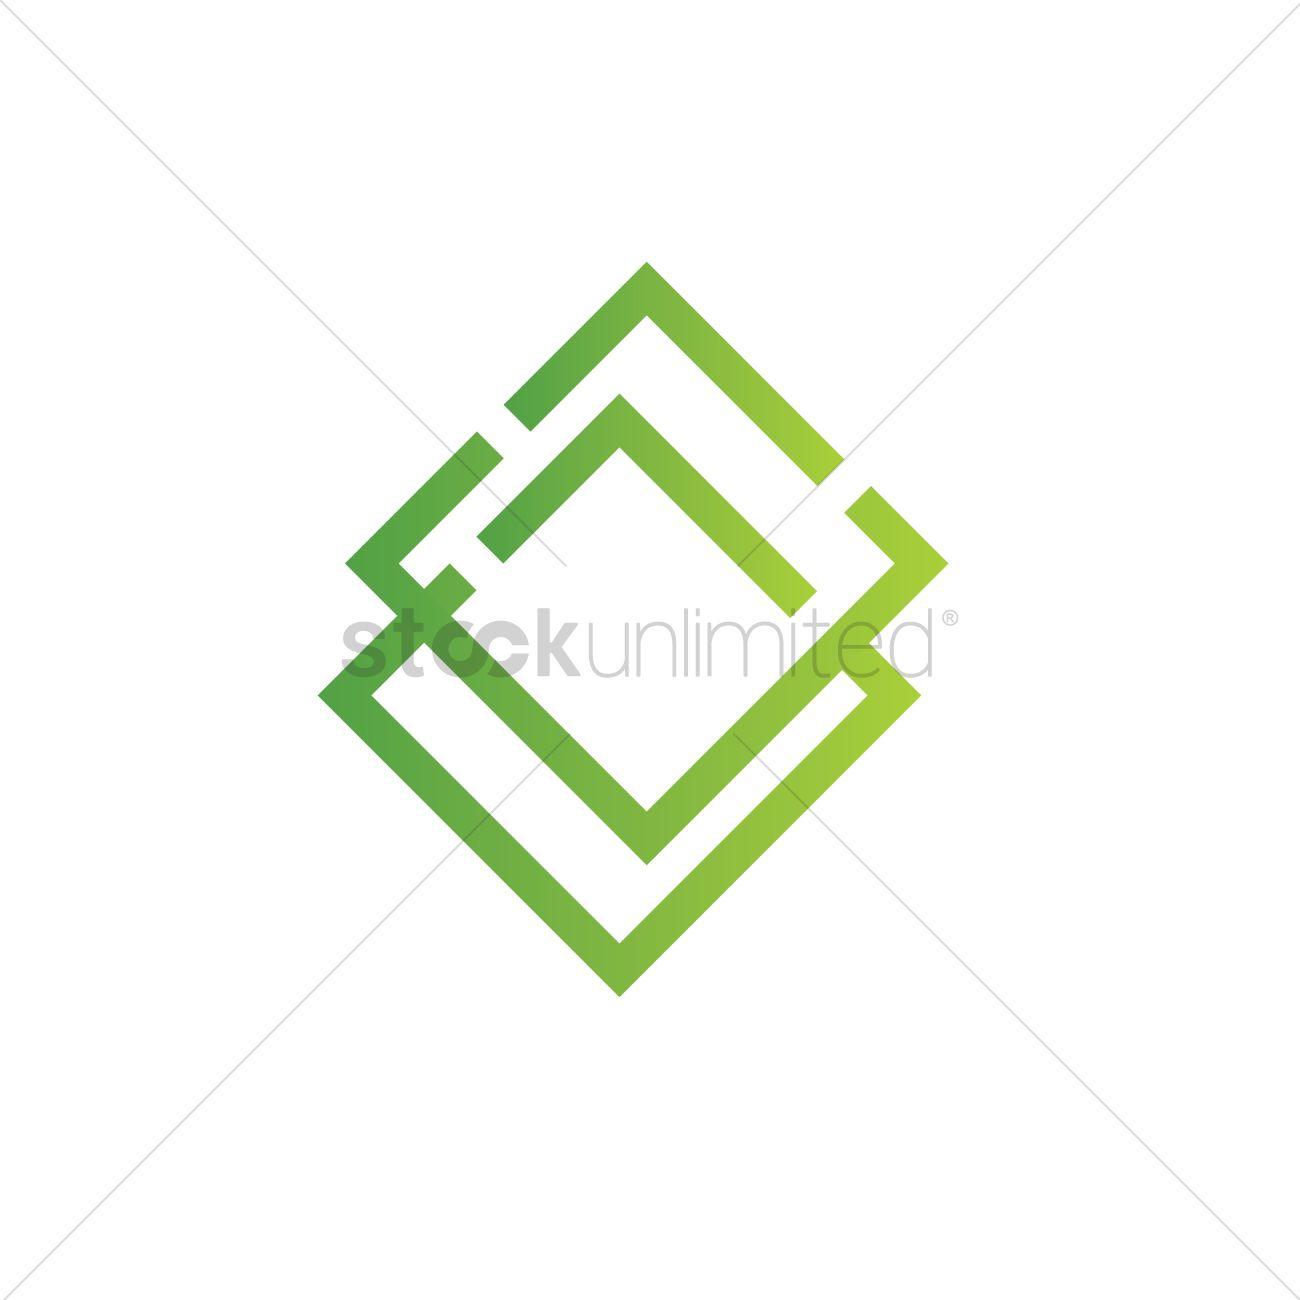 Rhombus Logo - Rhombus logo element Vector Image - 1939237 | StockUnlimited